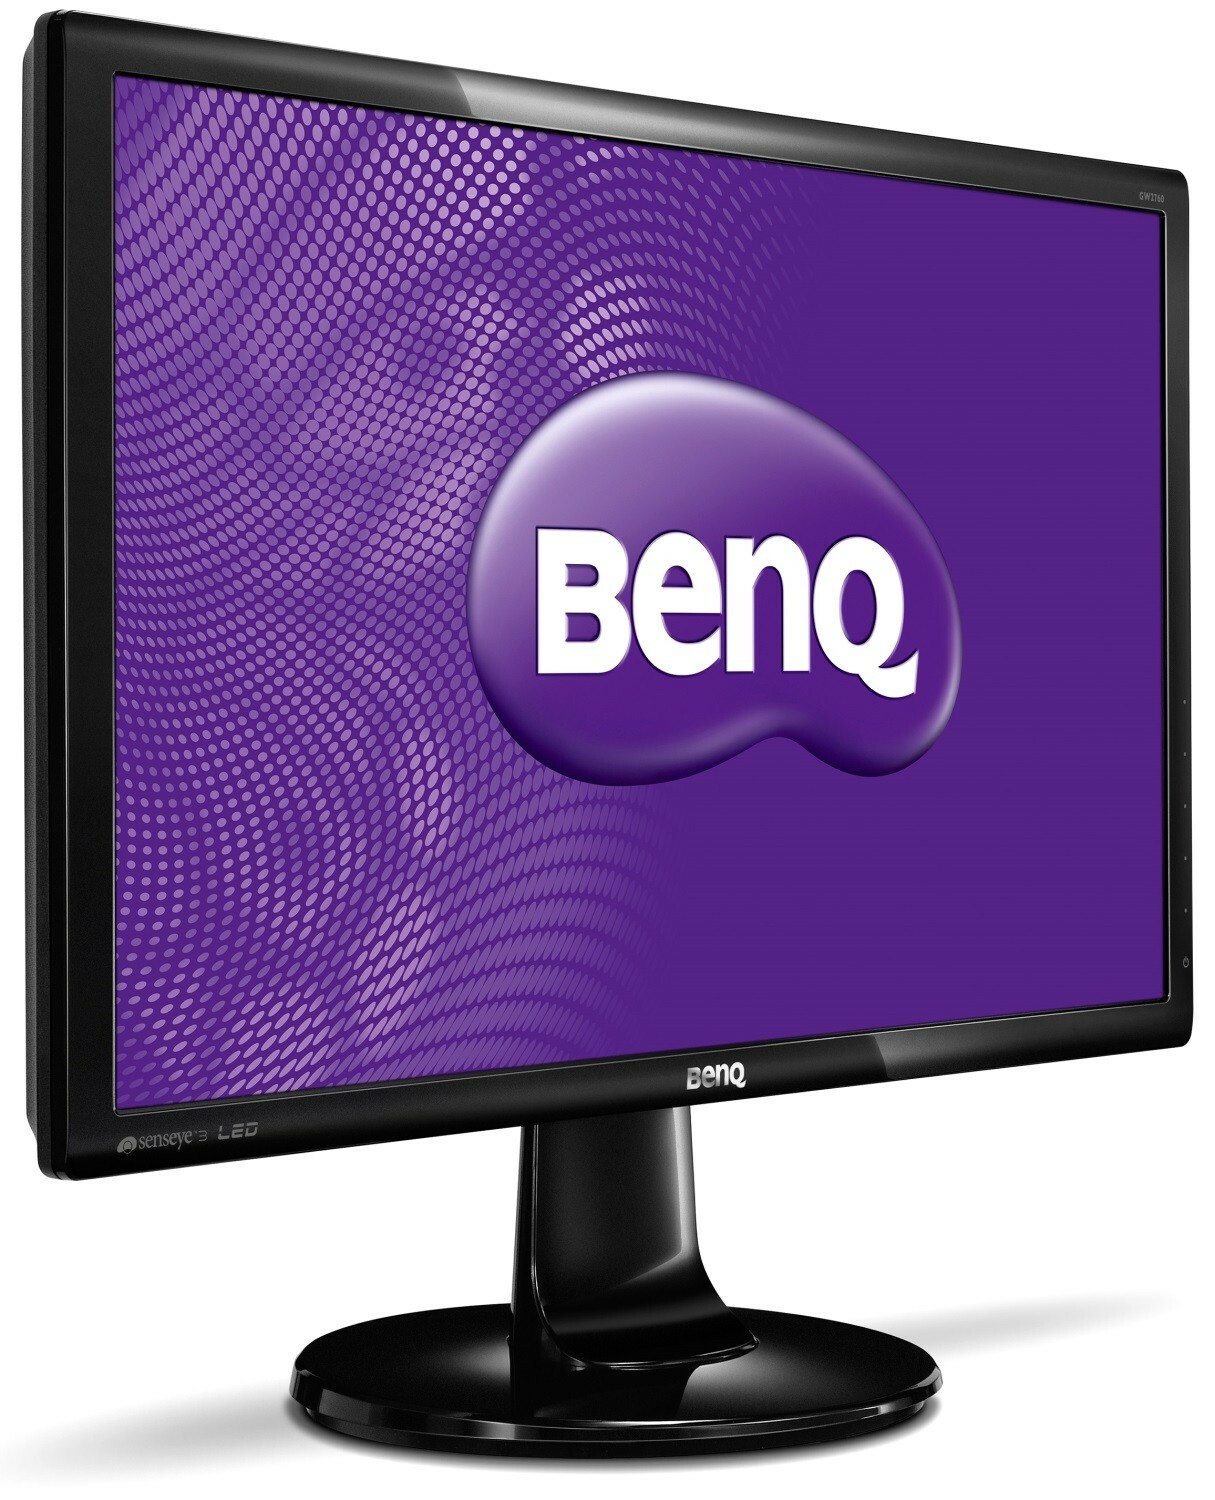 Monitor BenQ GW2760 / 27.0" Full HD VA / 4ms / 300cd / LED20M:1 /